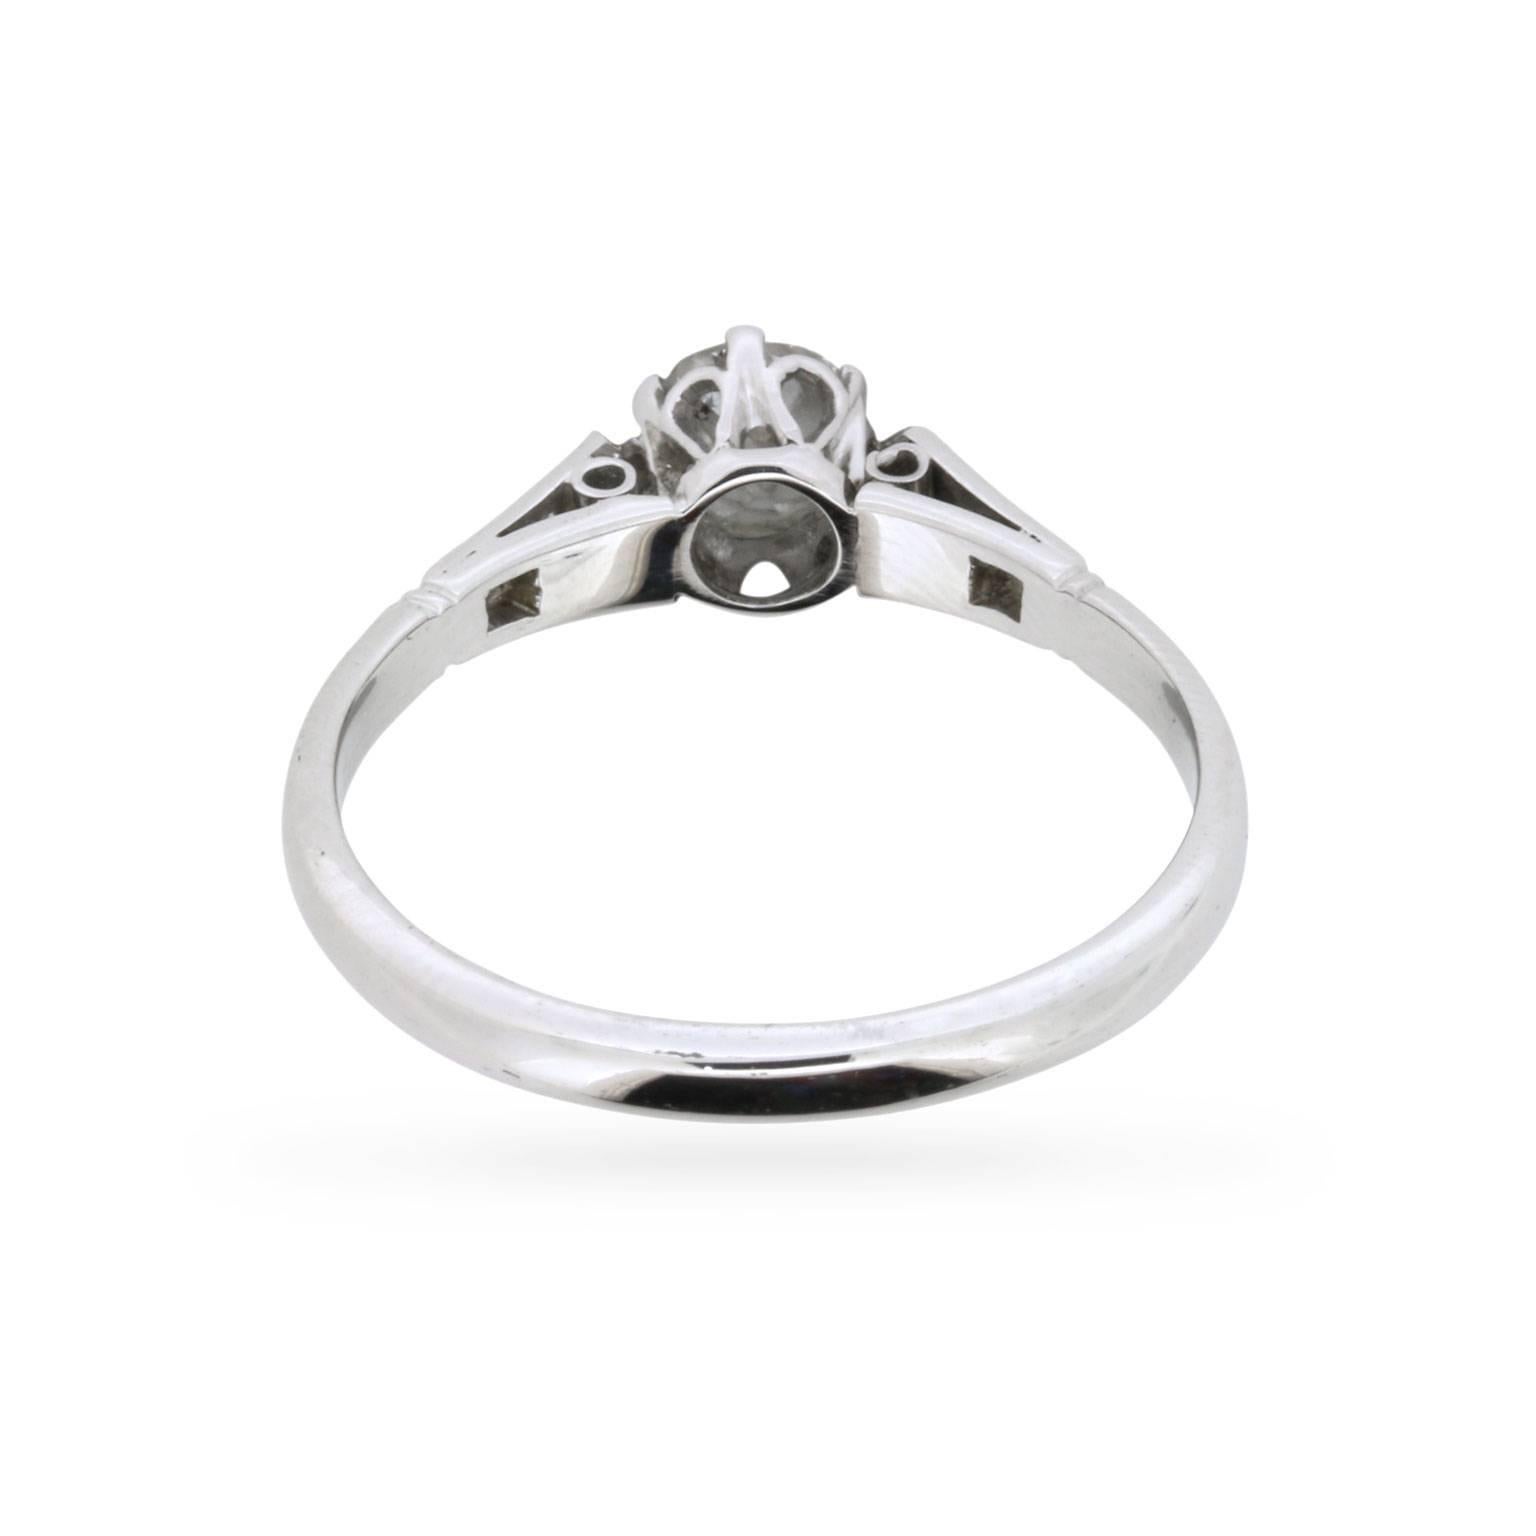 Women's or Men's Antique 0.60 Carat Old Cut Diamond Engagement Ring with Set Shoulders